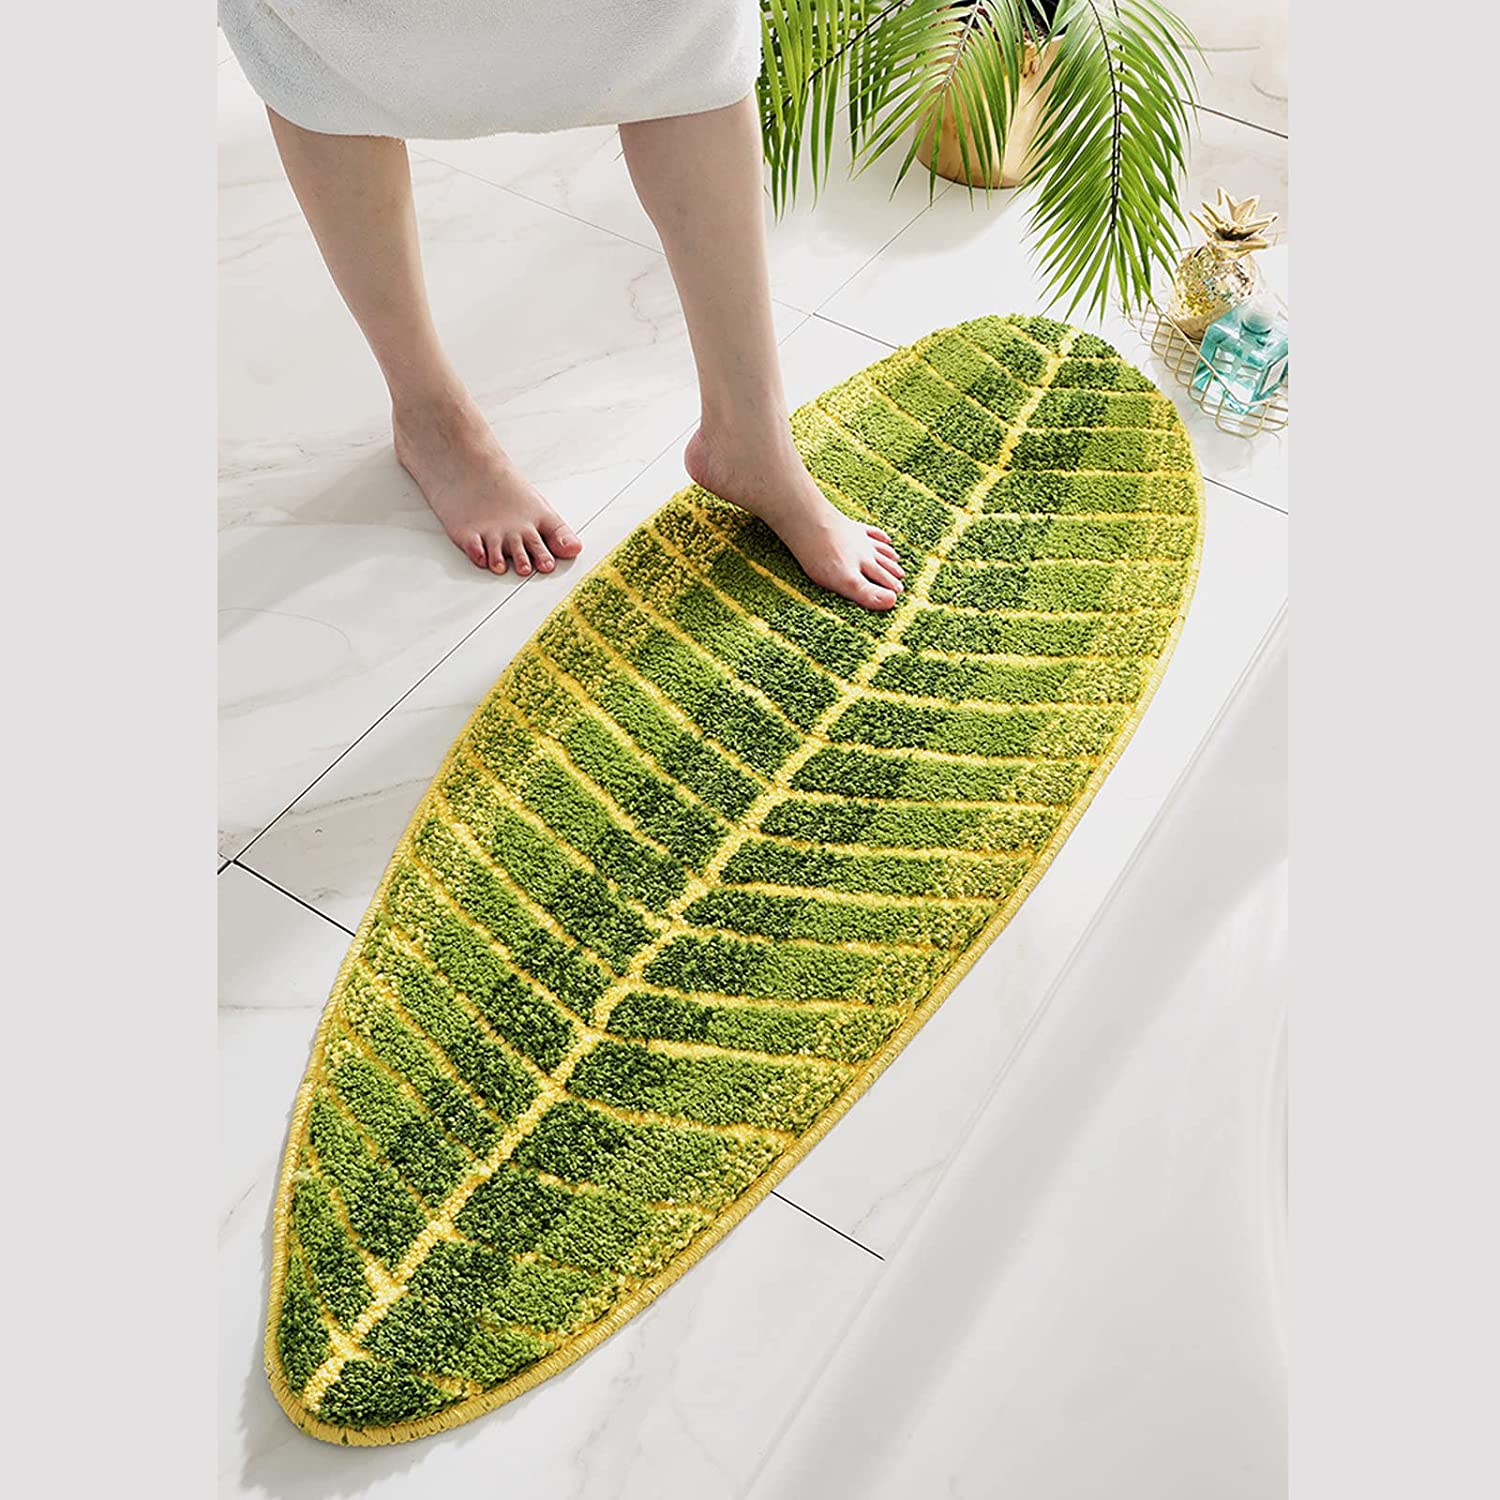 Irregular Shaped Carpet Bathroom Water Absorbent Anti-slip Mat Bath  Entrance Mat, Regular Size 40*60cm, Flower Pattern